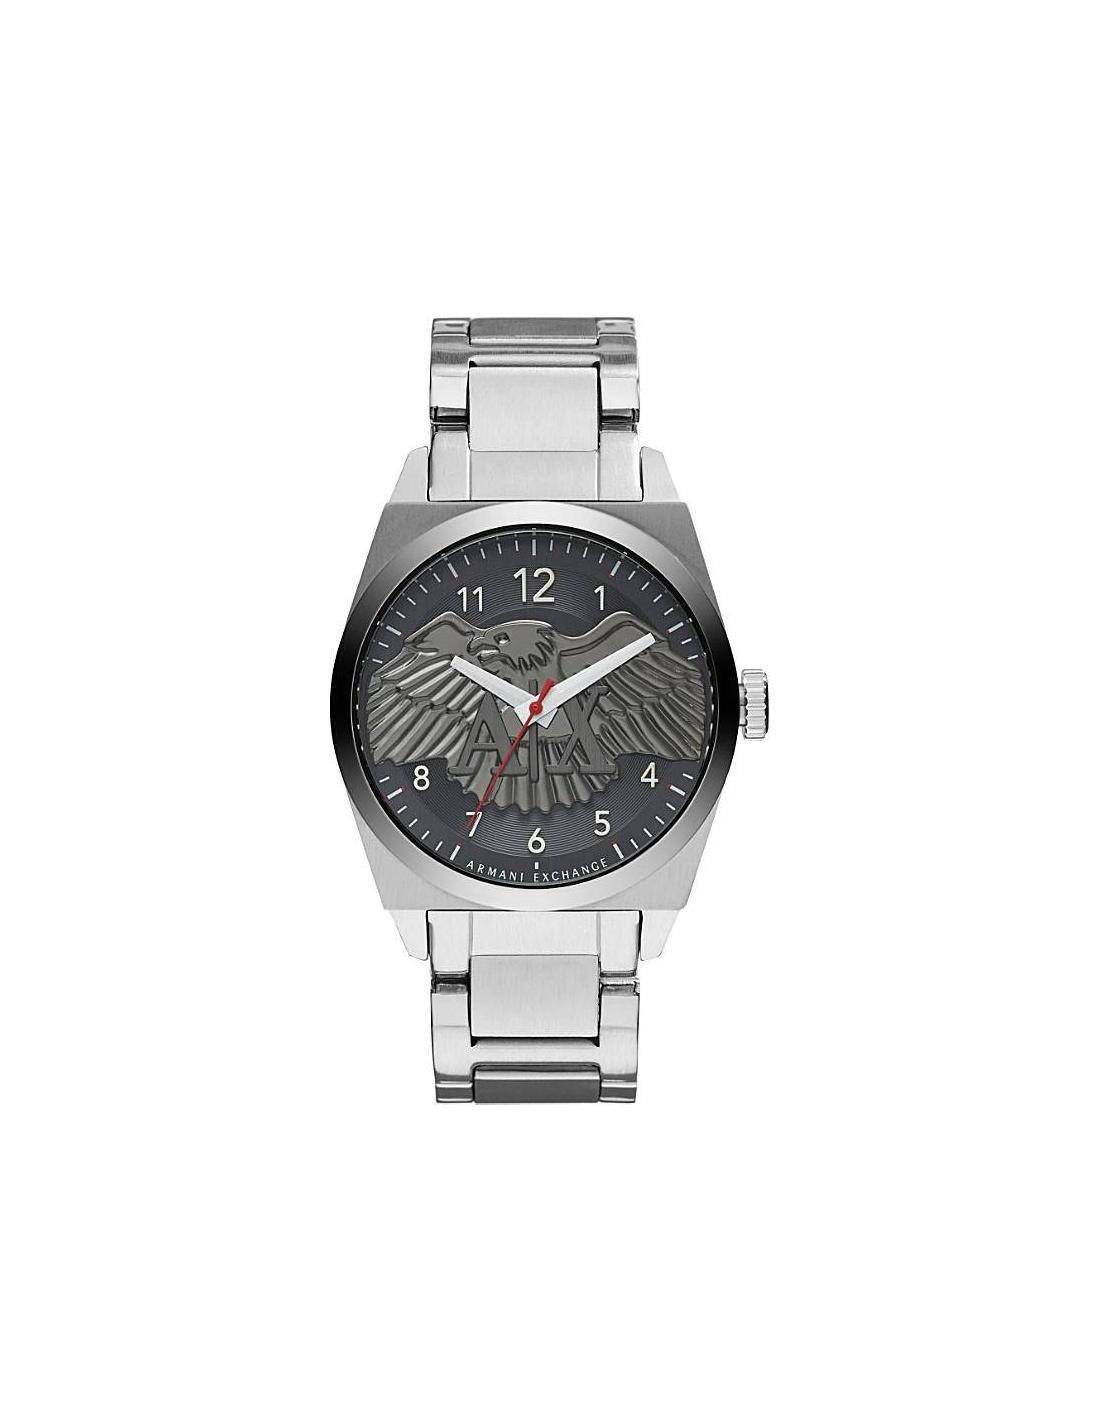 Armani Exchange AX2308 men's watch at 189,00 € Authorized Vendor